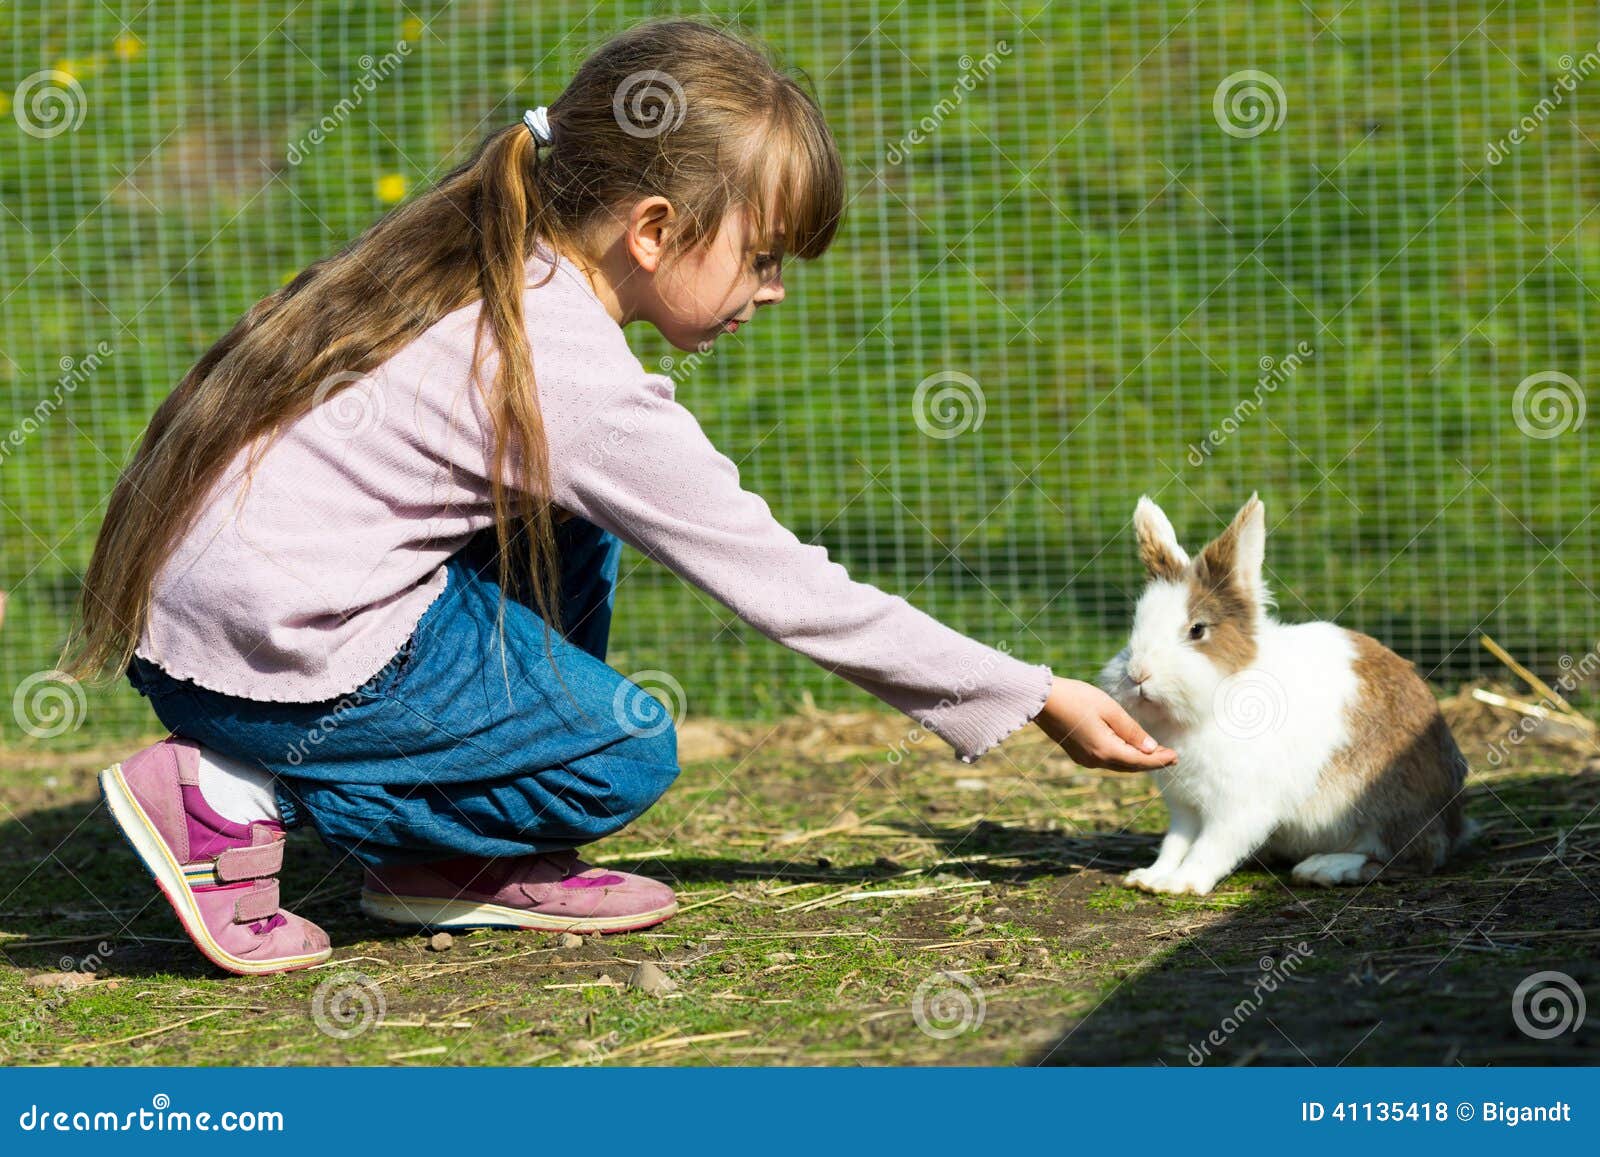 girl feeding rabbit